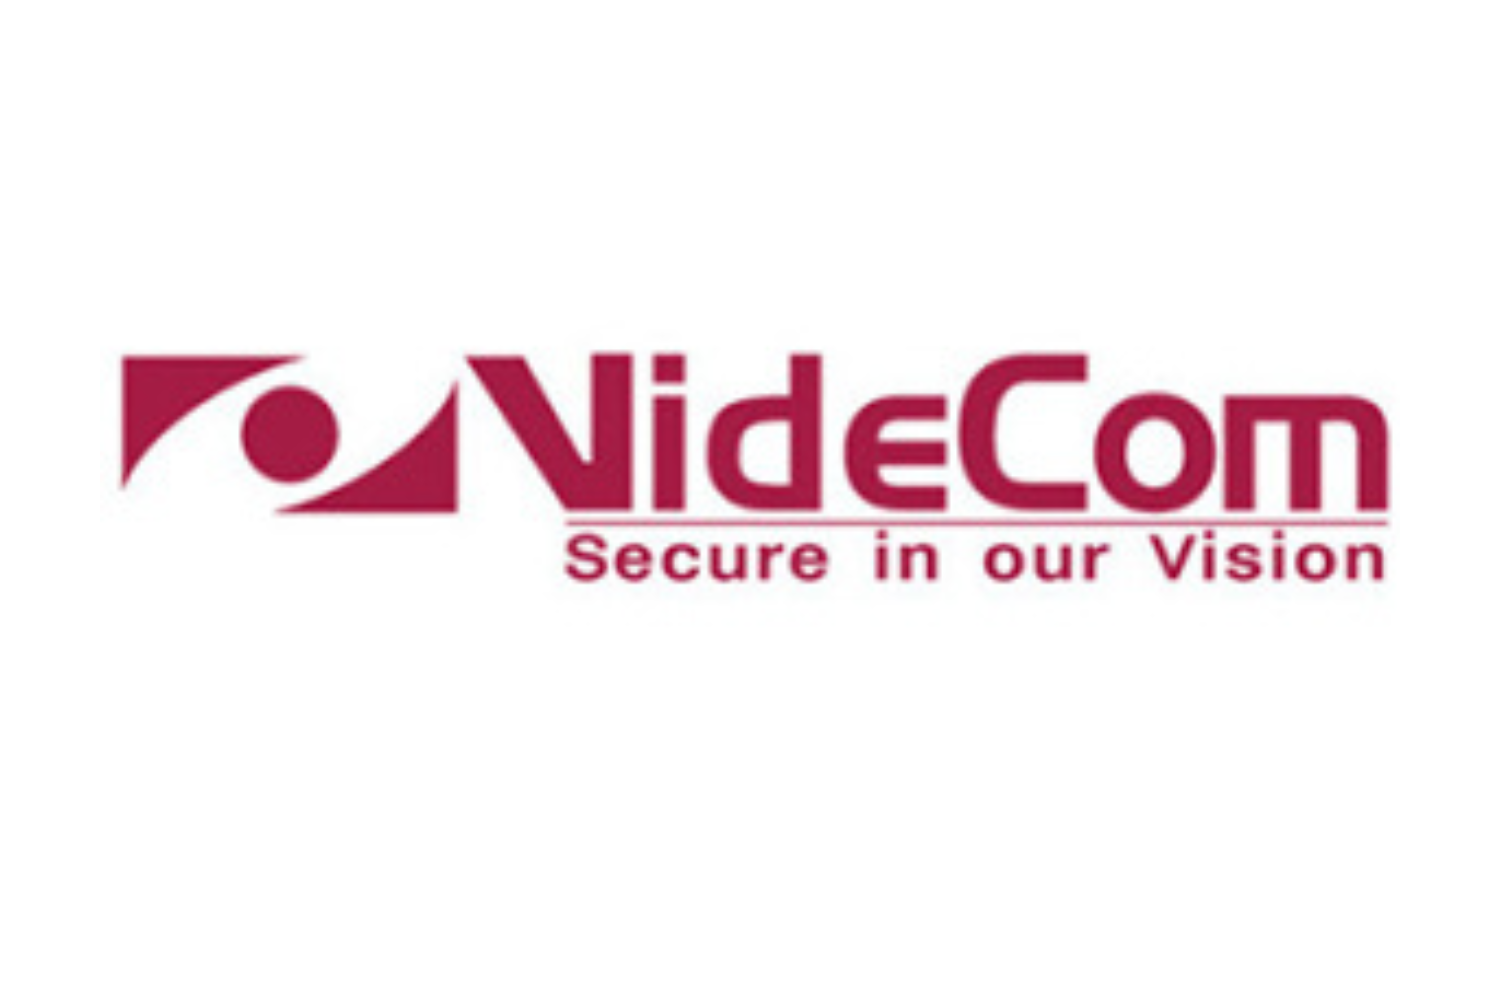 Videcom Security Limited